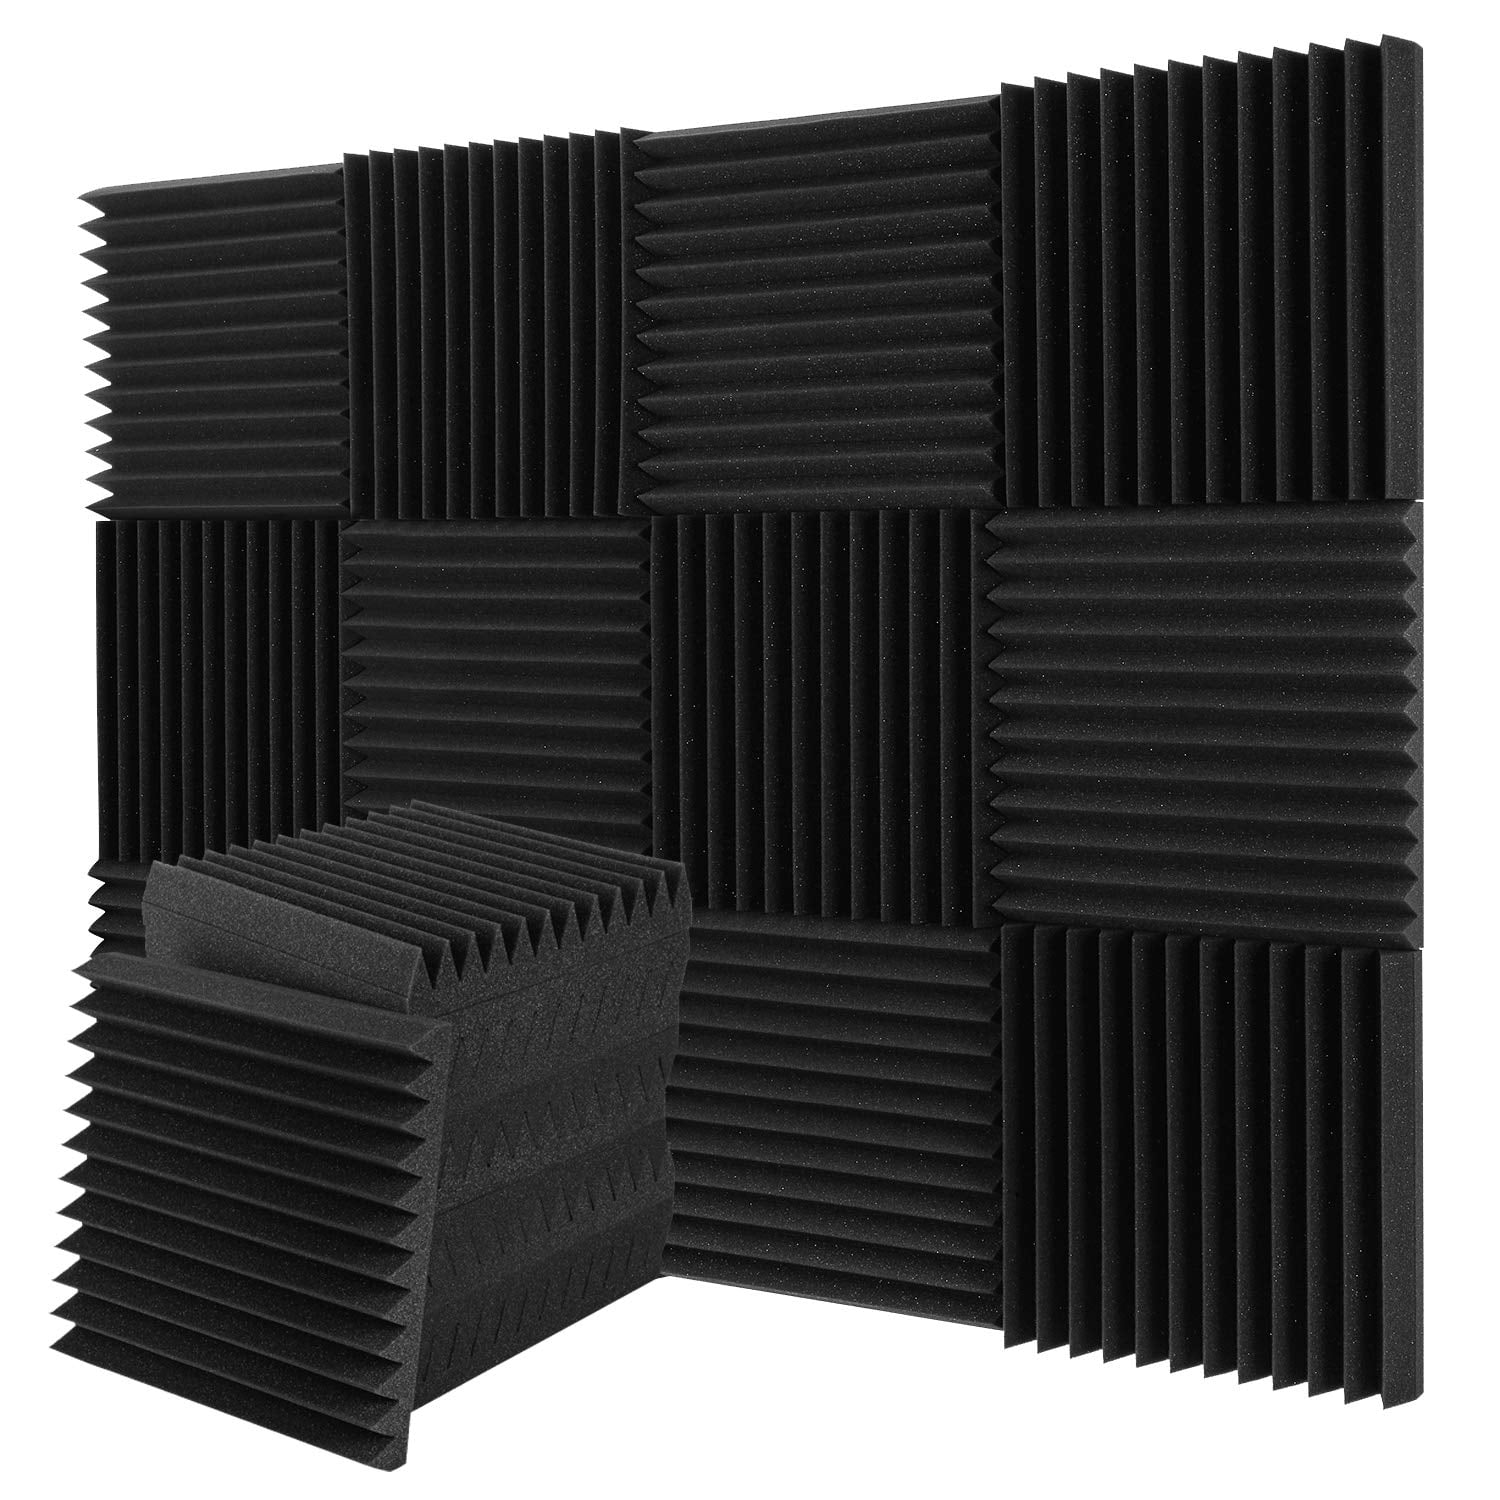 Fire Resistant Sound Proof Padding Acoustic Treatment Foam 50 Pack Acoustic Foam Panels Black-EGG 1 X 12 X 12 Studio Soundproofing Wedges 